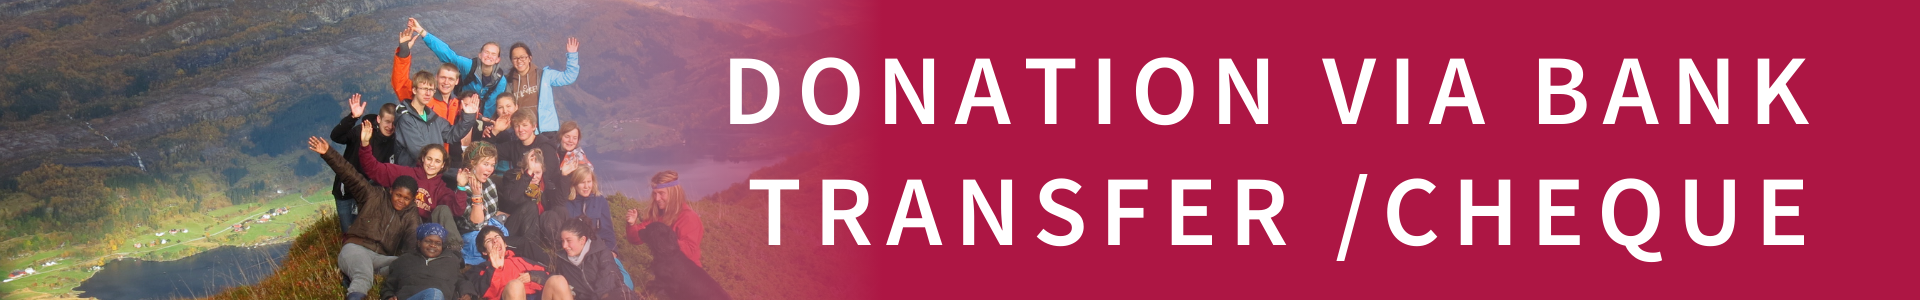 Donation via bank transfer